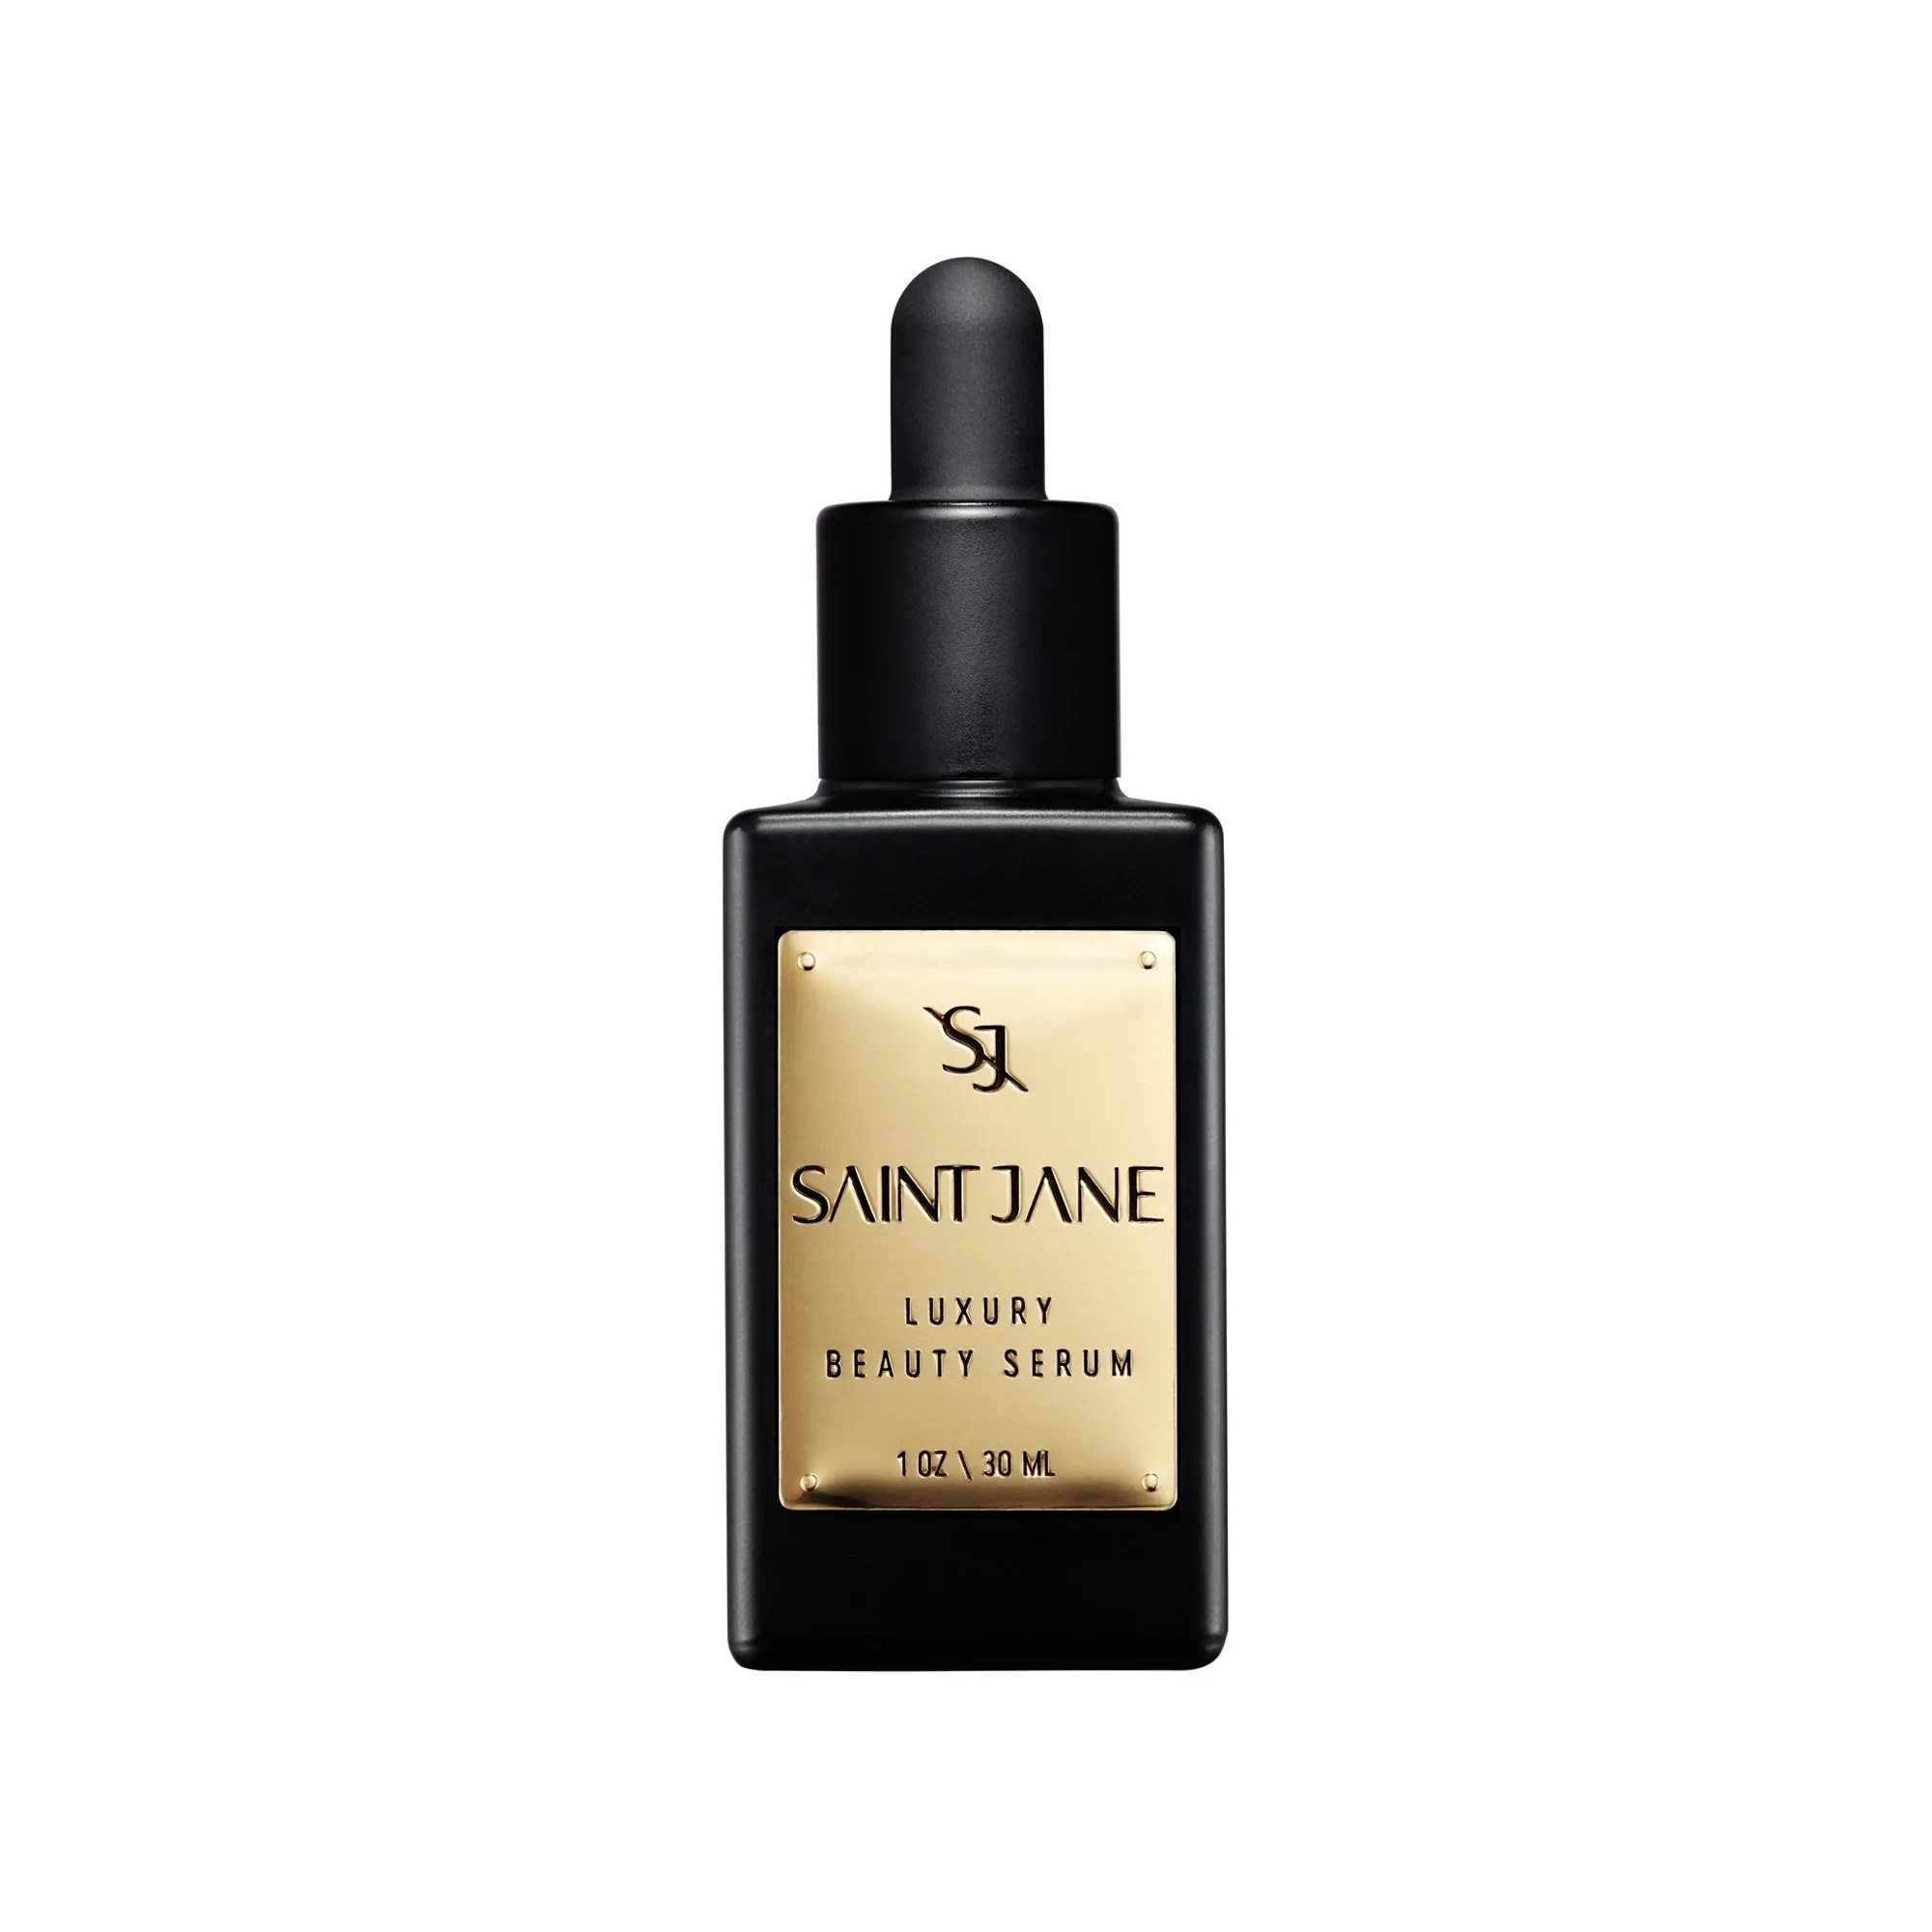 saint jane luxury beauty serum on a white background